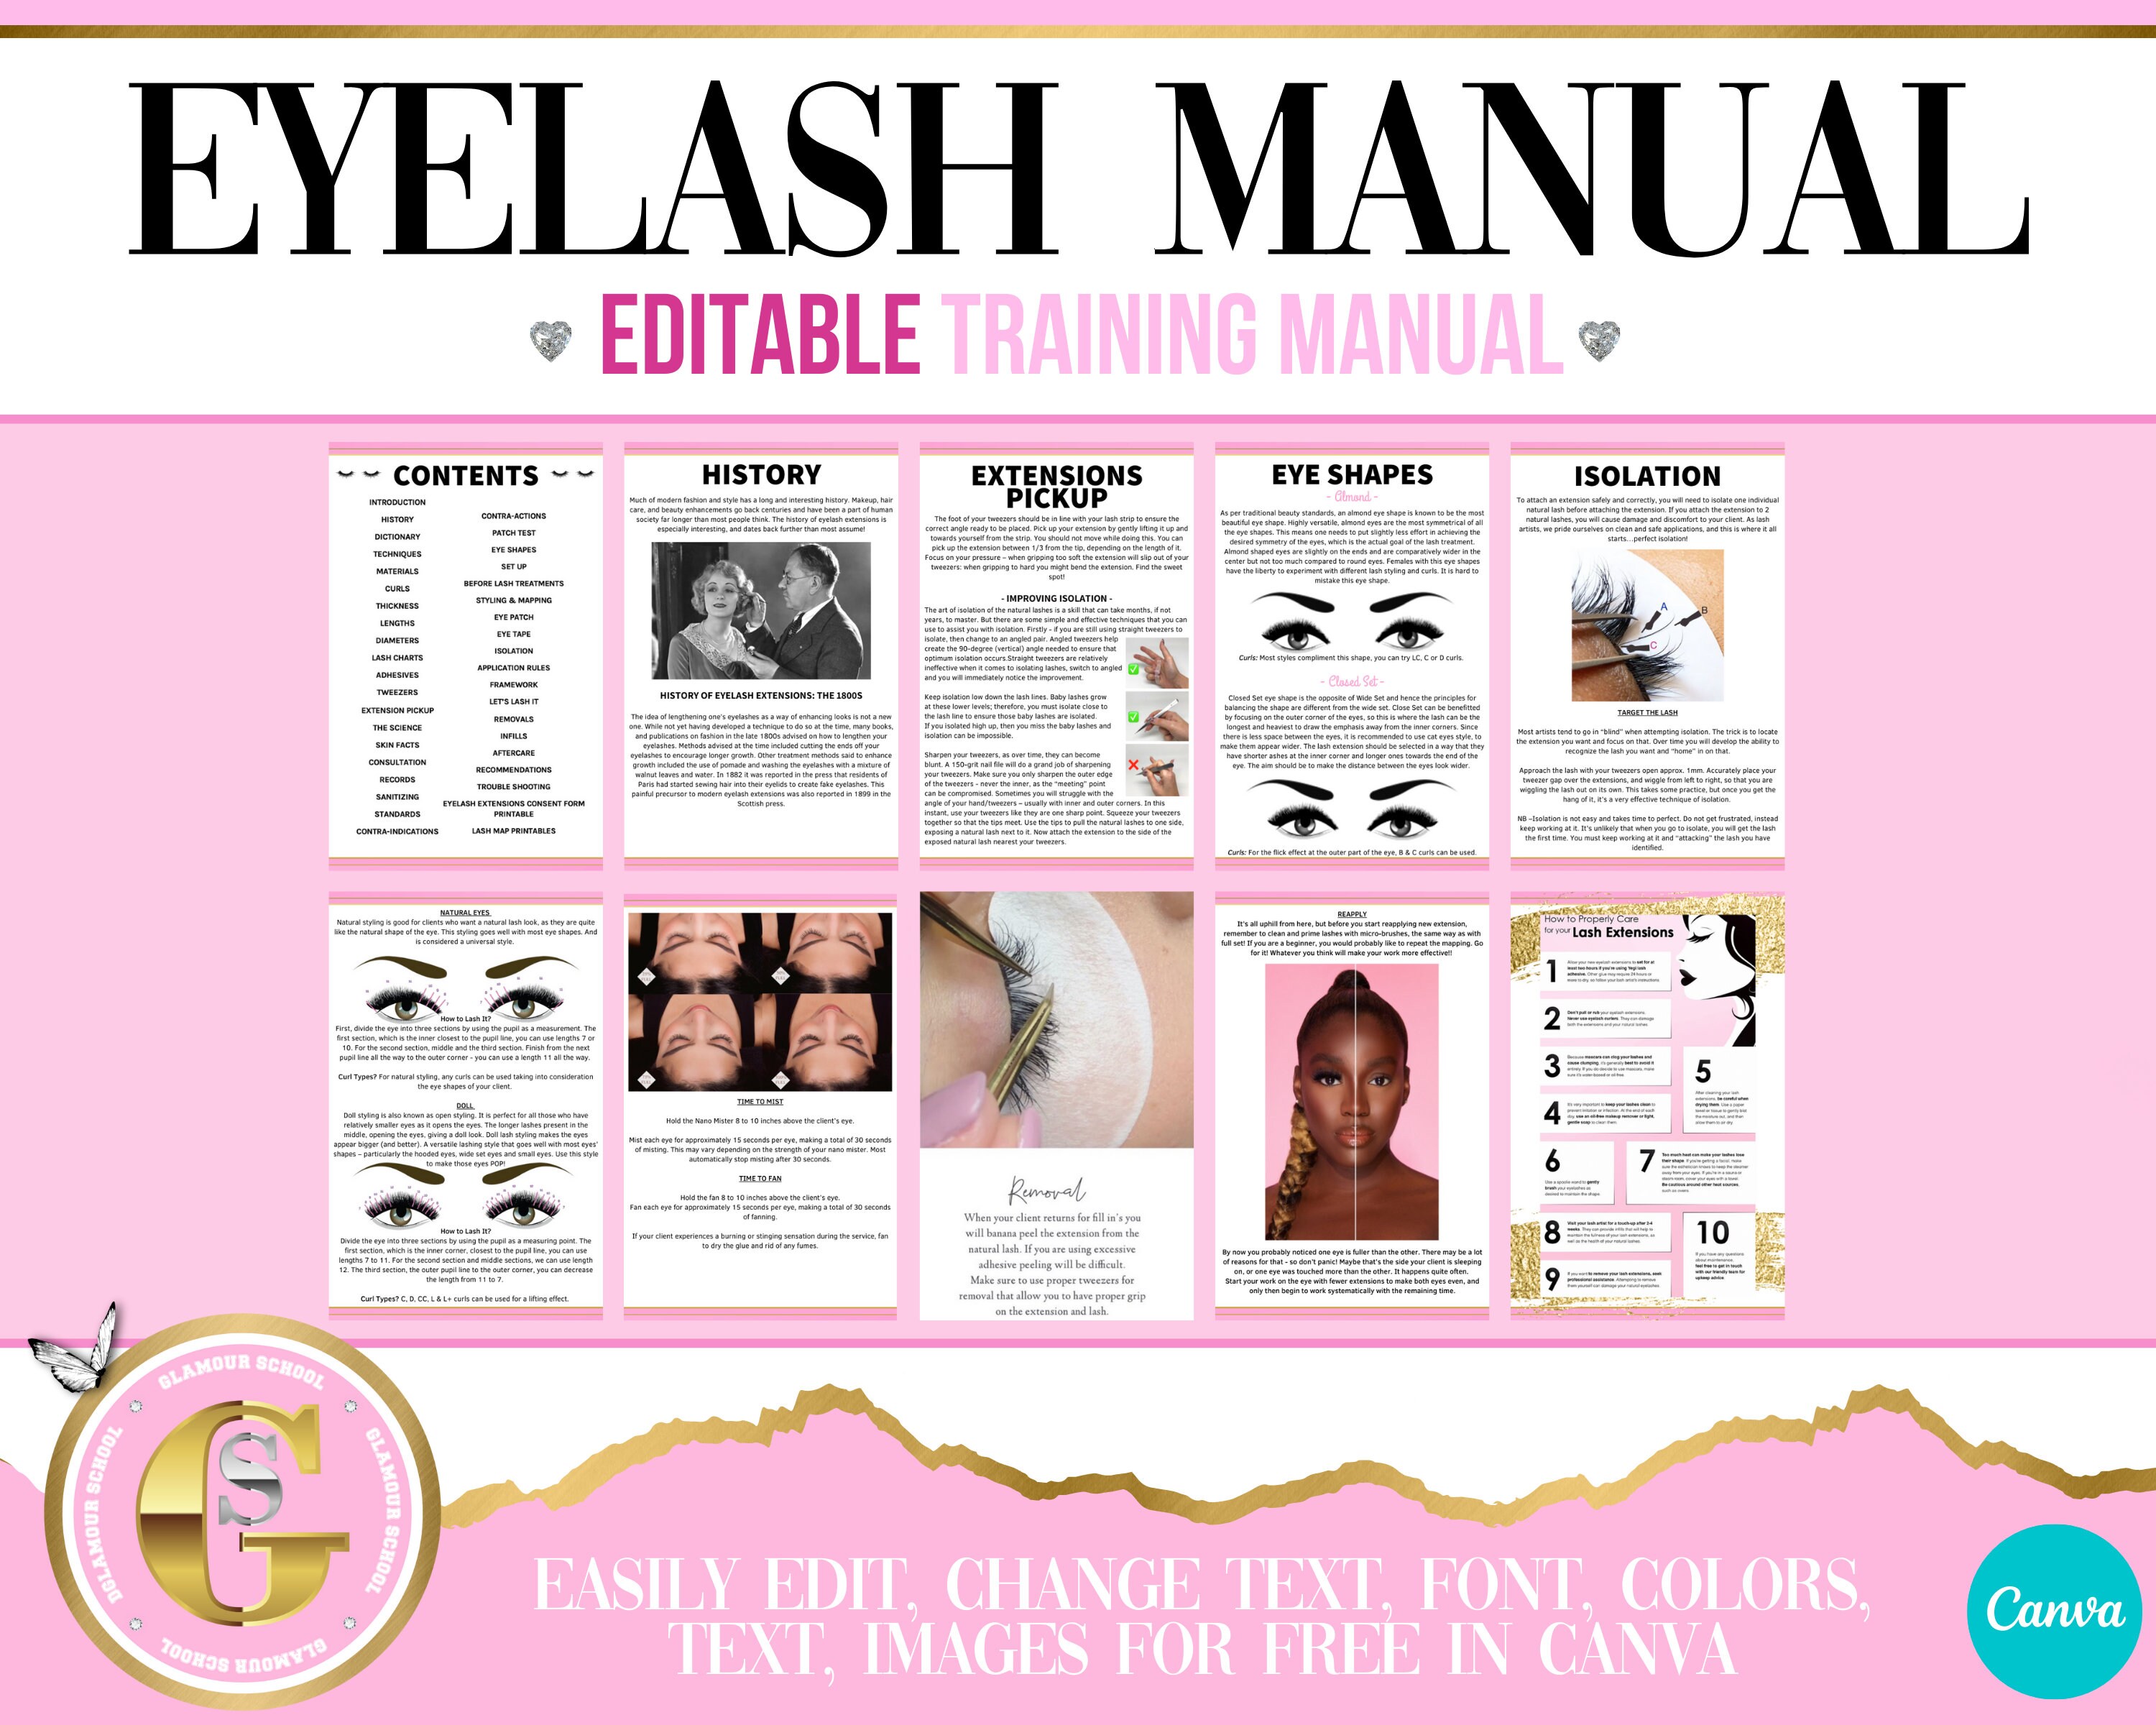 lash-manual-canva-editable-training-manual-classic-volume-etsy-uk